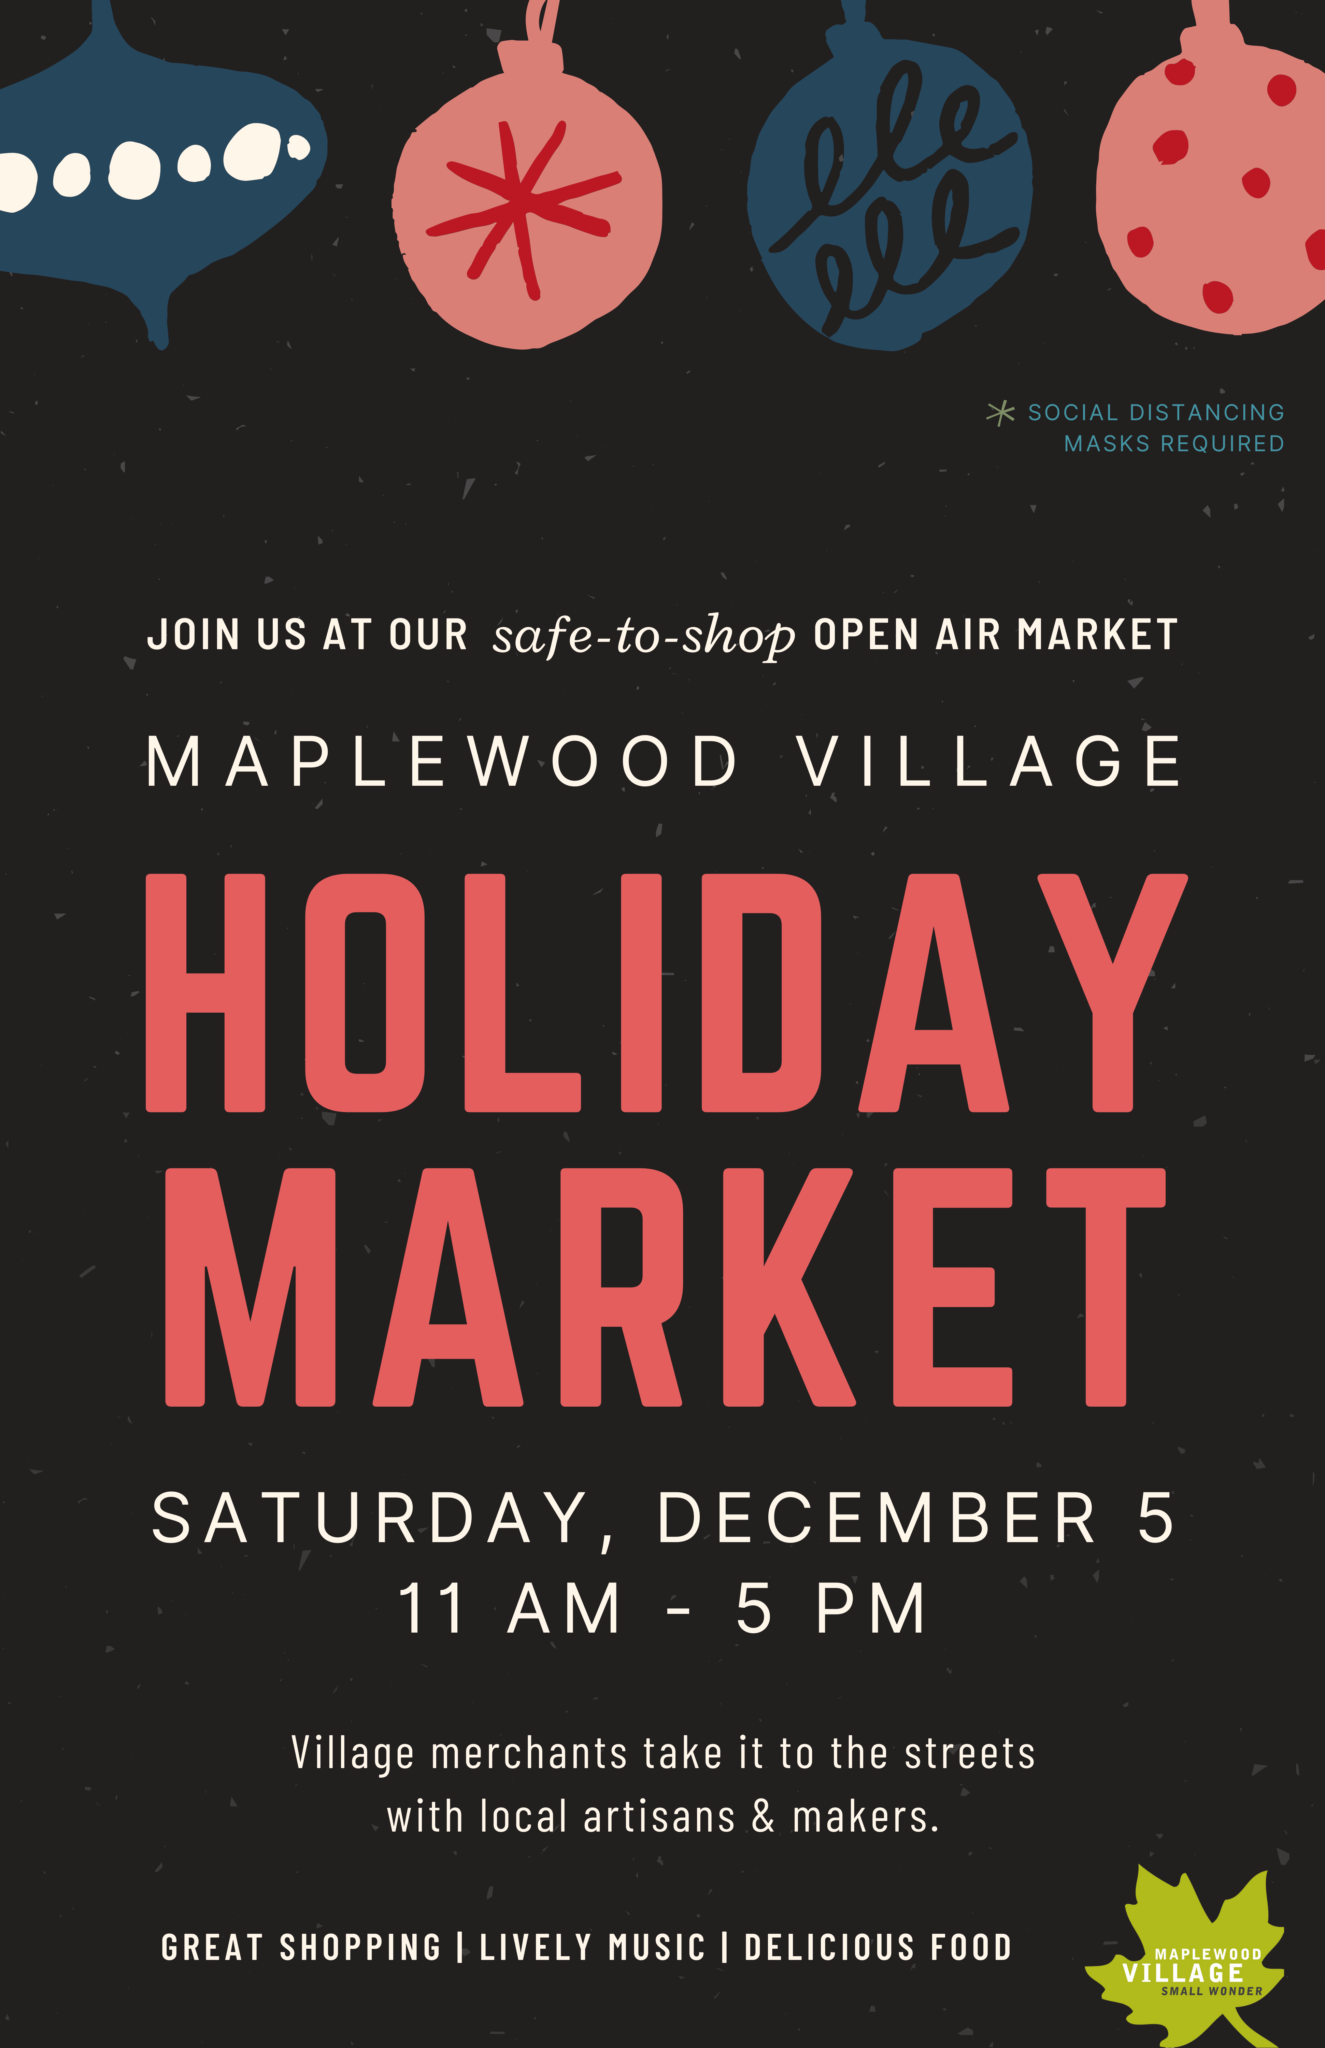 Maplewood Village Alliance to Host Outdoor Holiday Market on December 5